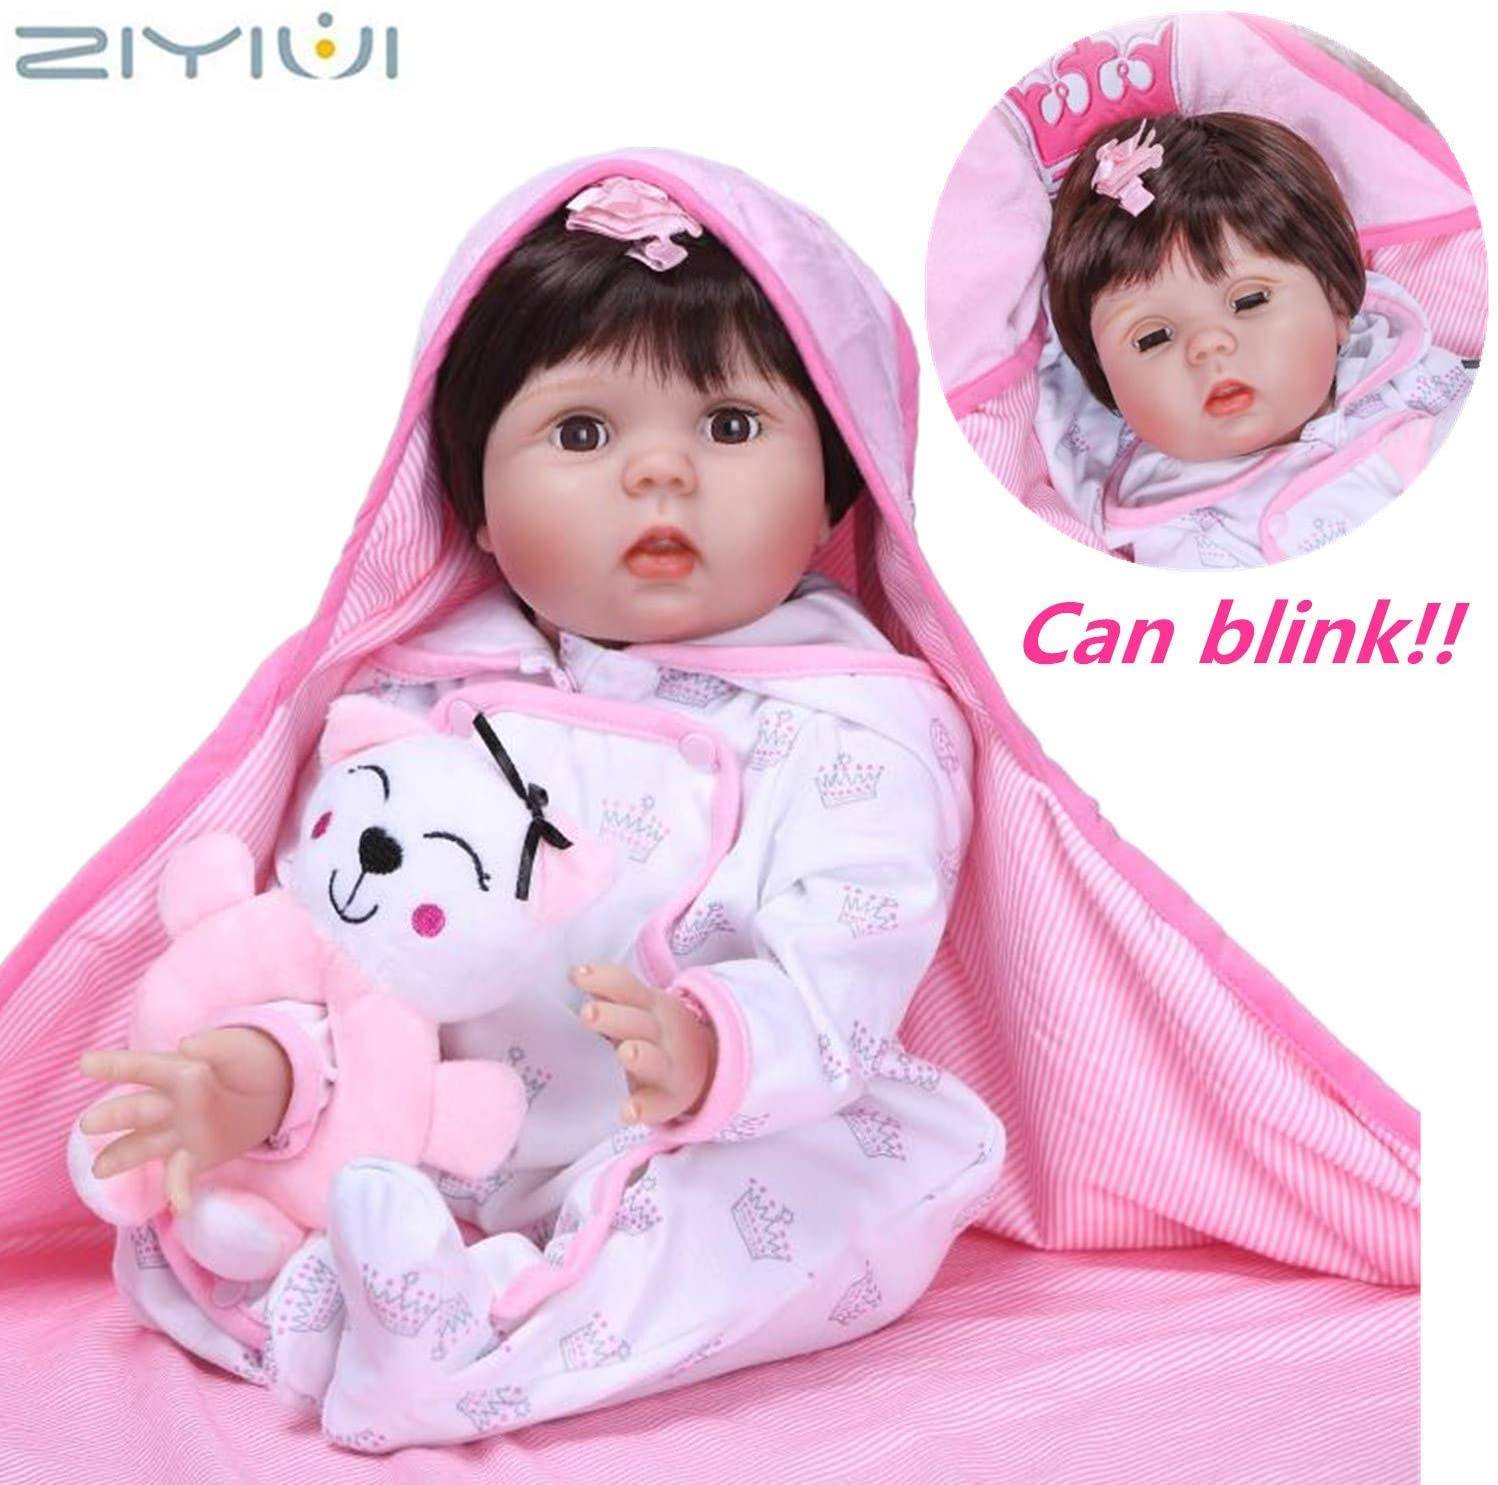 ZIYIUI 22 Inch 55 CM Real Life Reborn Toddler Dolls Soft Vinyl Silicone Real Girl Boy Toy Doll ,Eyes Can Blink Reborn baby doll